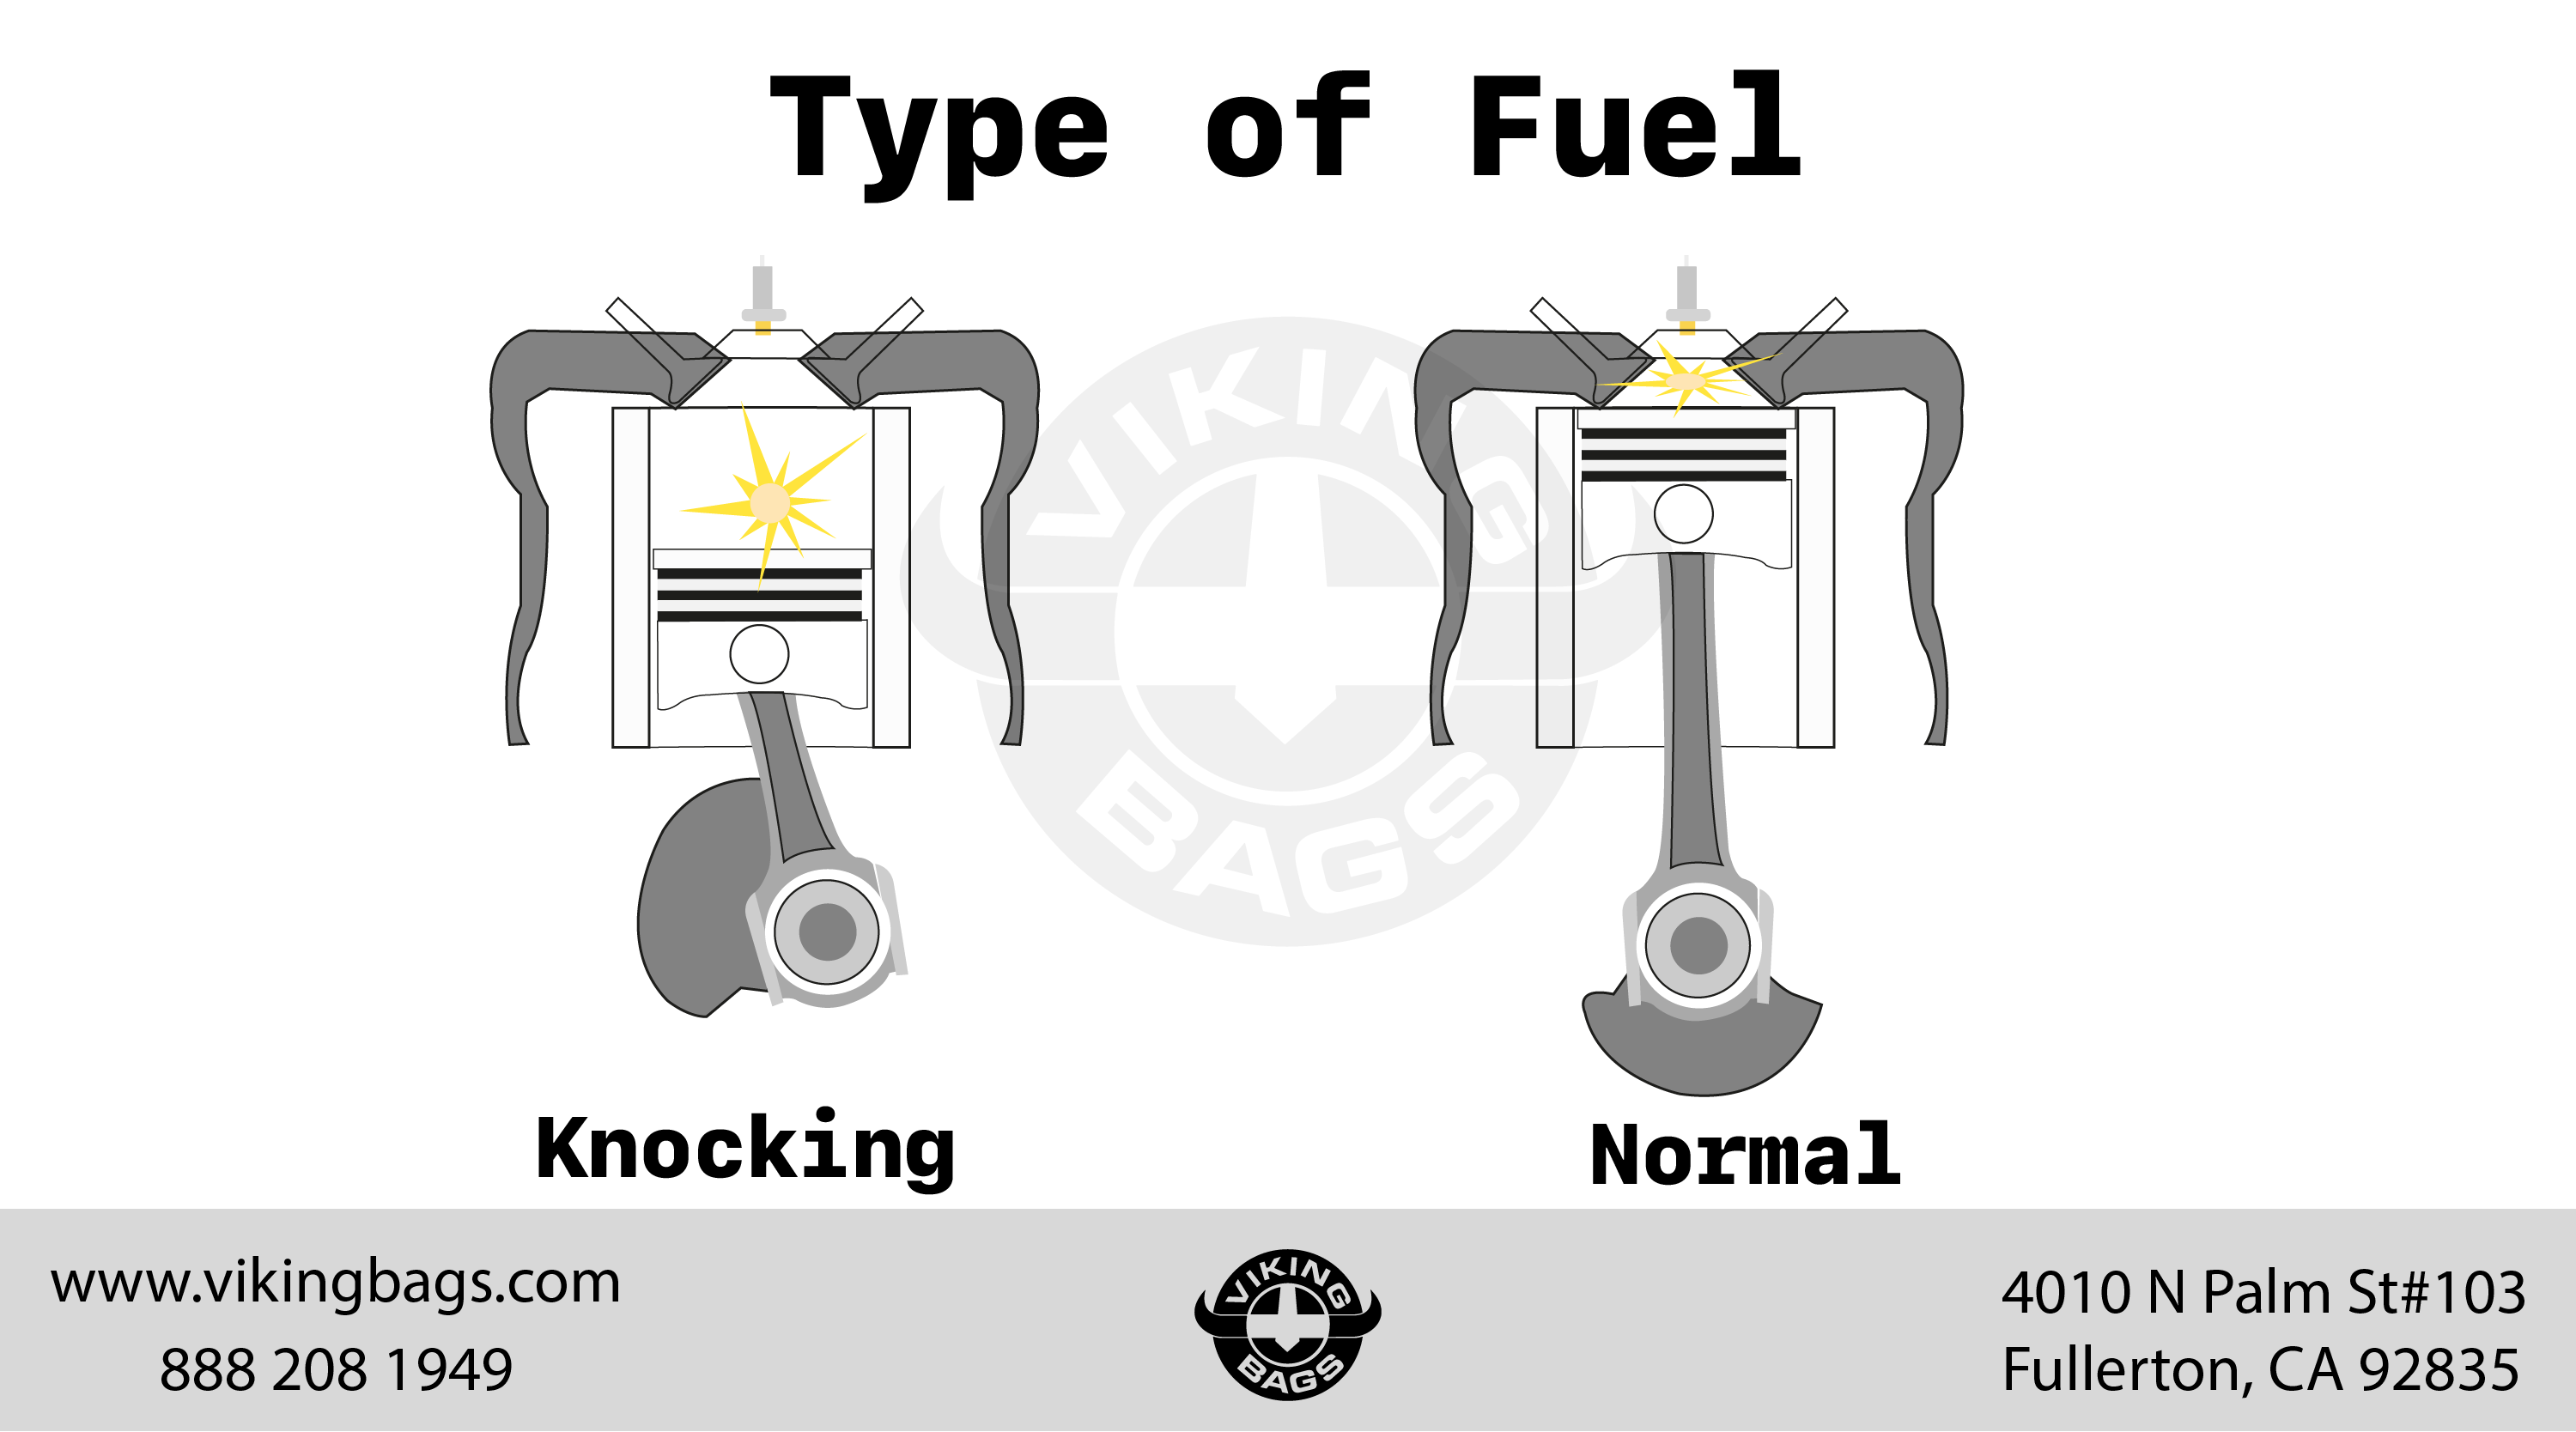 Type of Fuel: